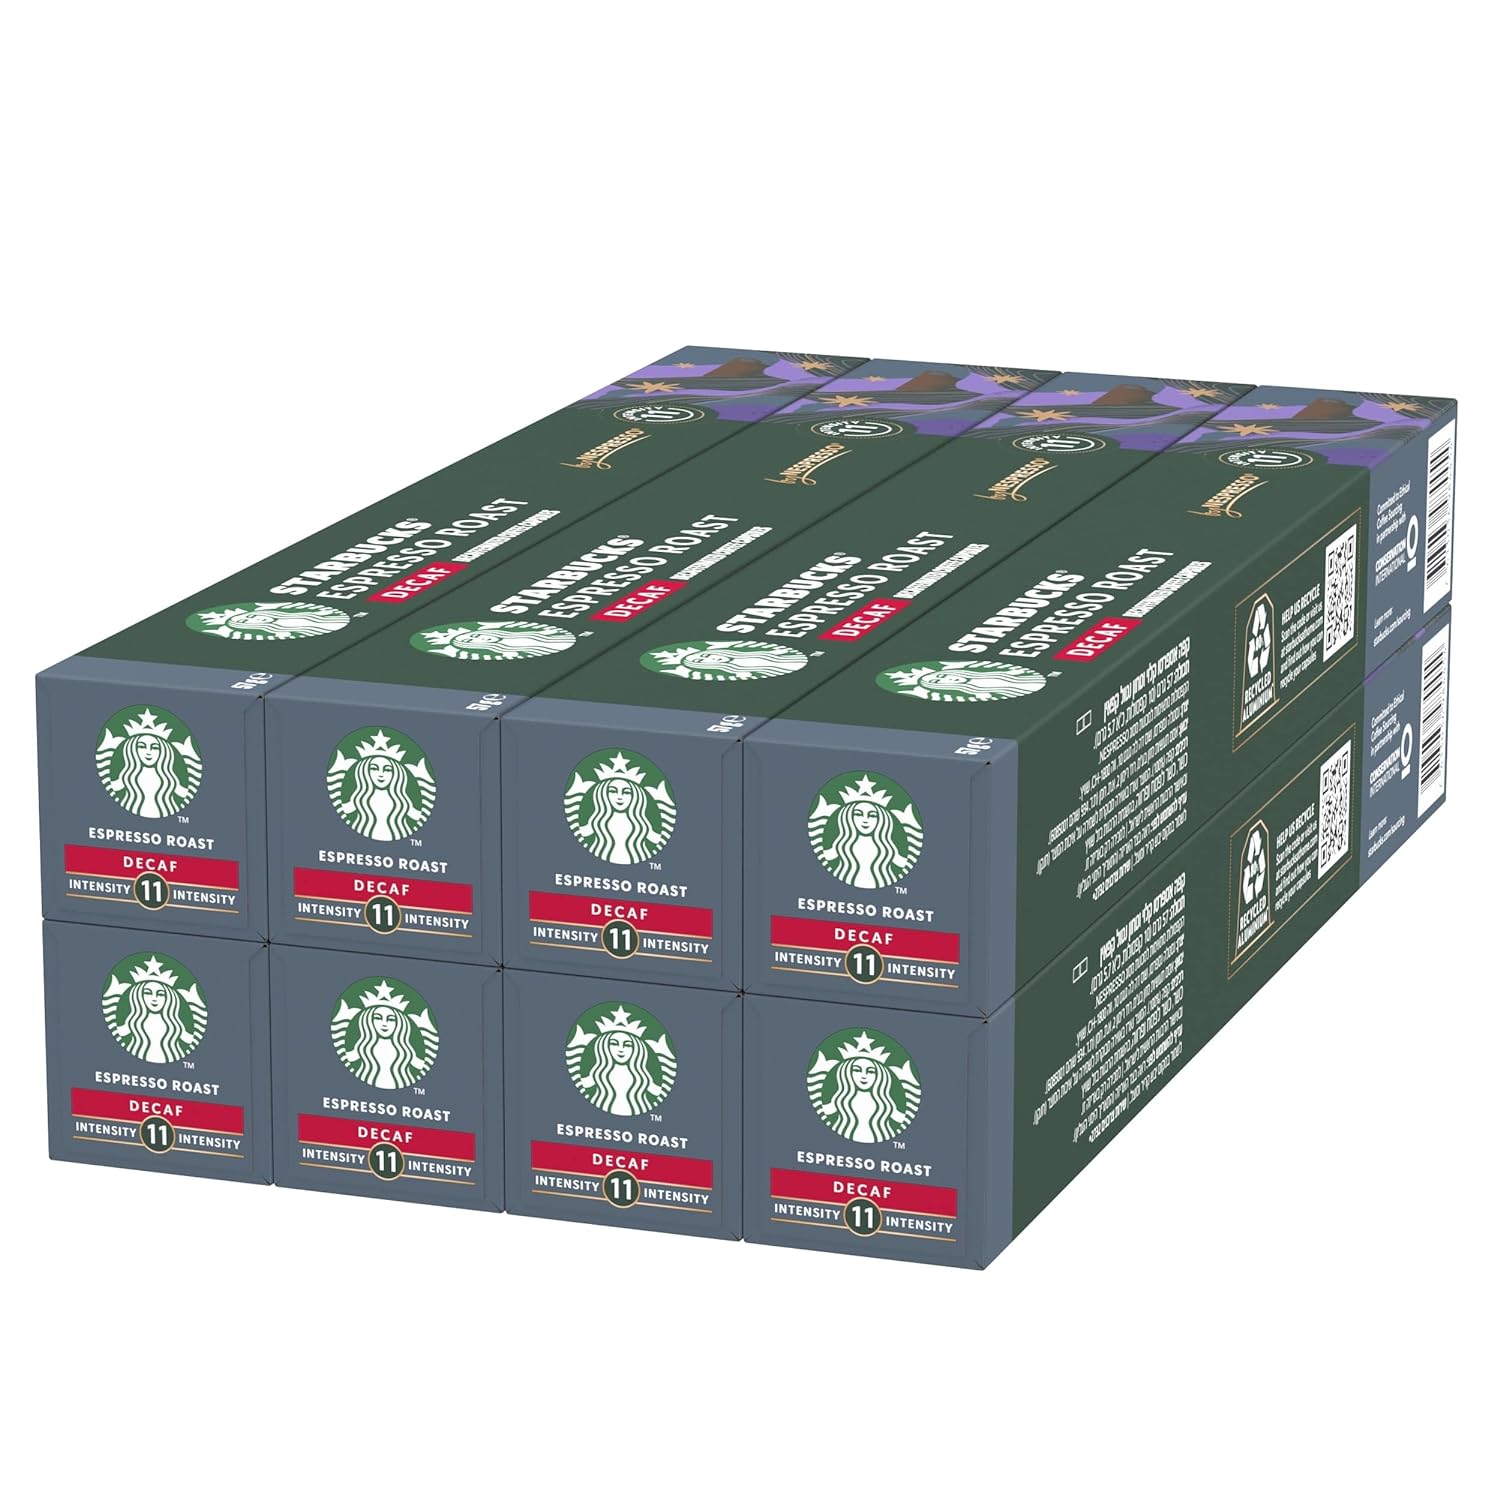 STARBUCKS Espresso Roast Decaffeinated by Nespresso, Dark Roast, Coffee Capsules 8 x 10 (80 Capsules)